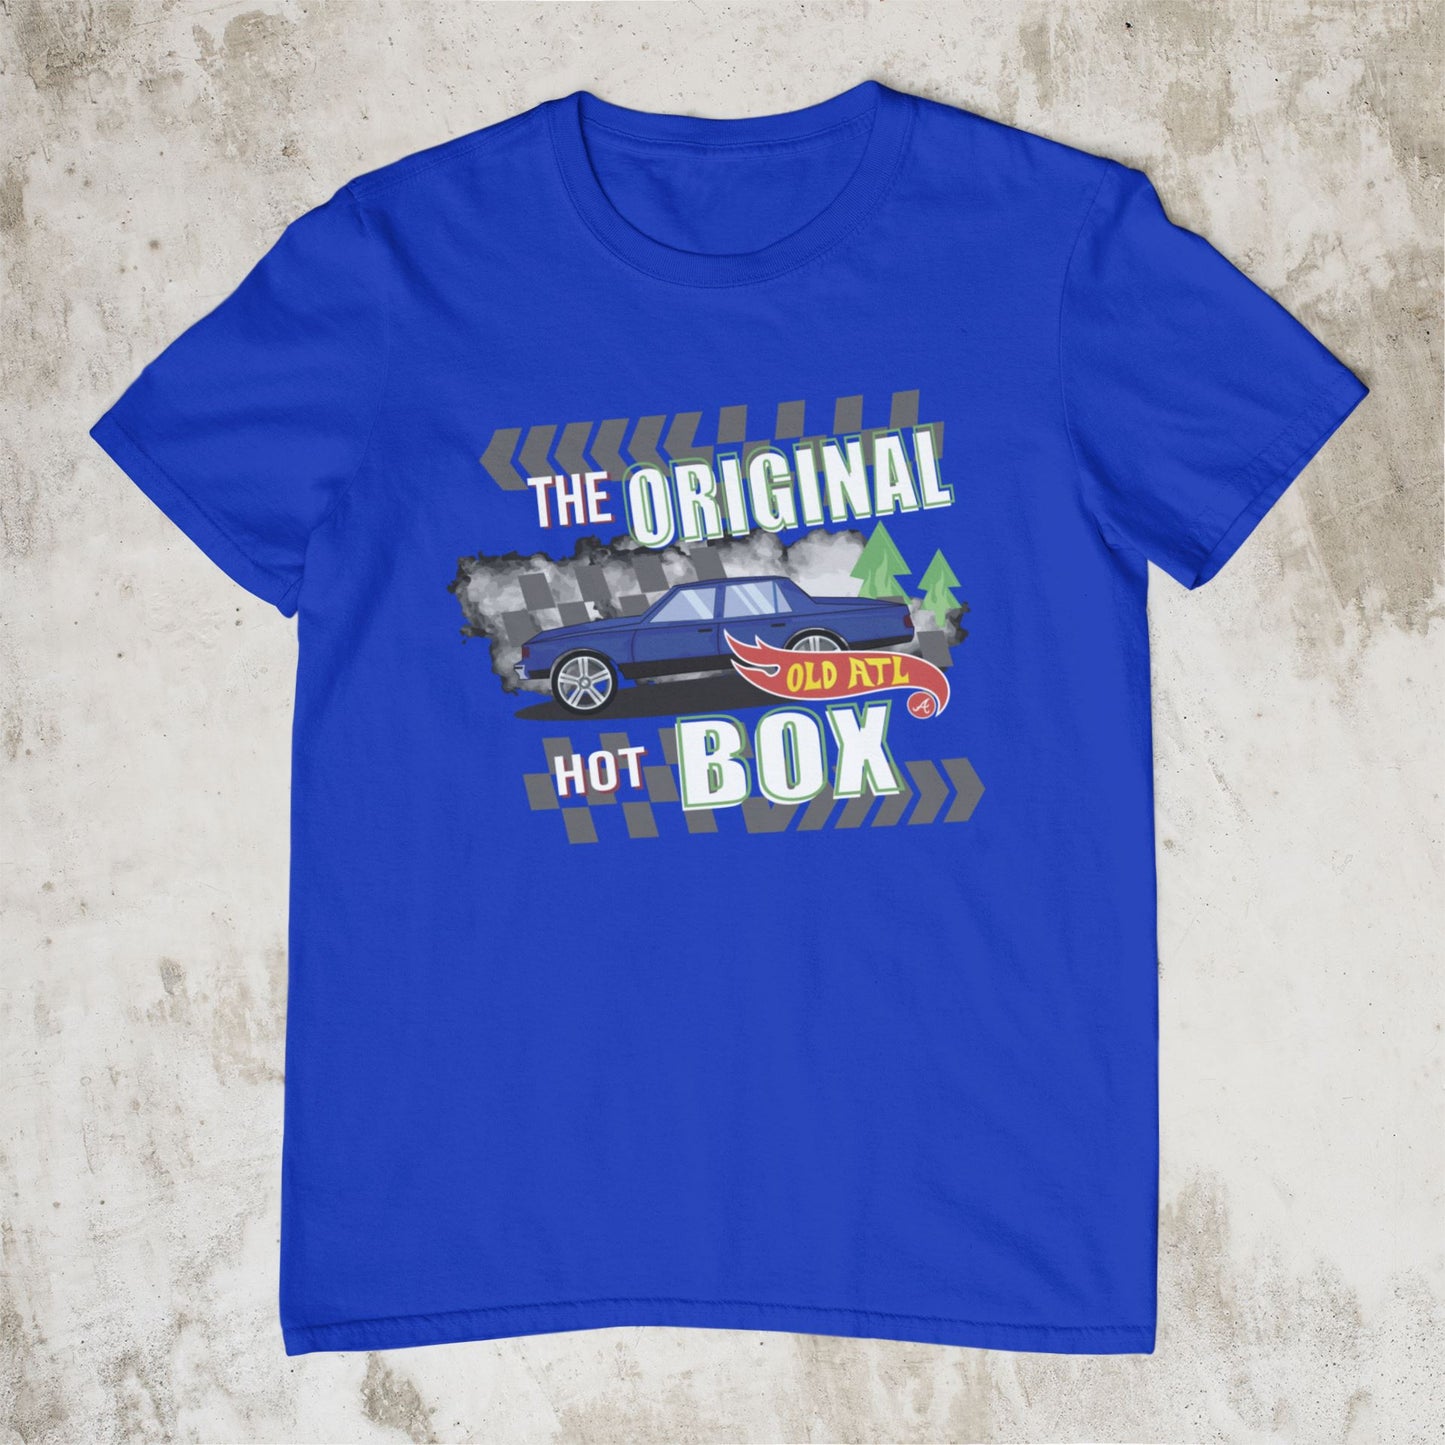 Old ATL - Original Hot Box T-Shirt B1ack By Design LLC 